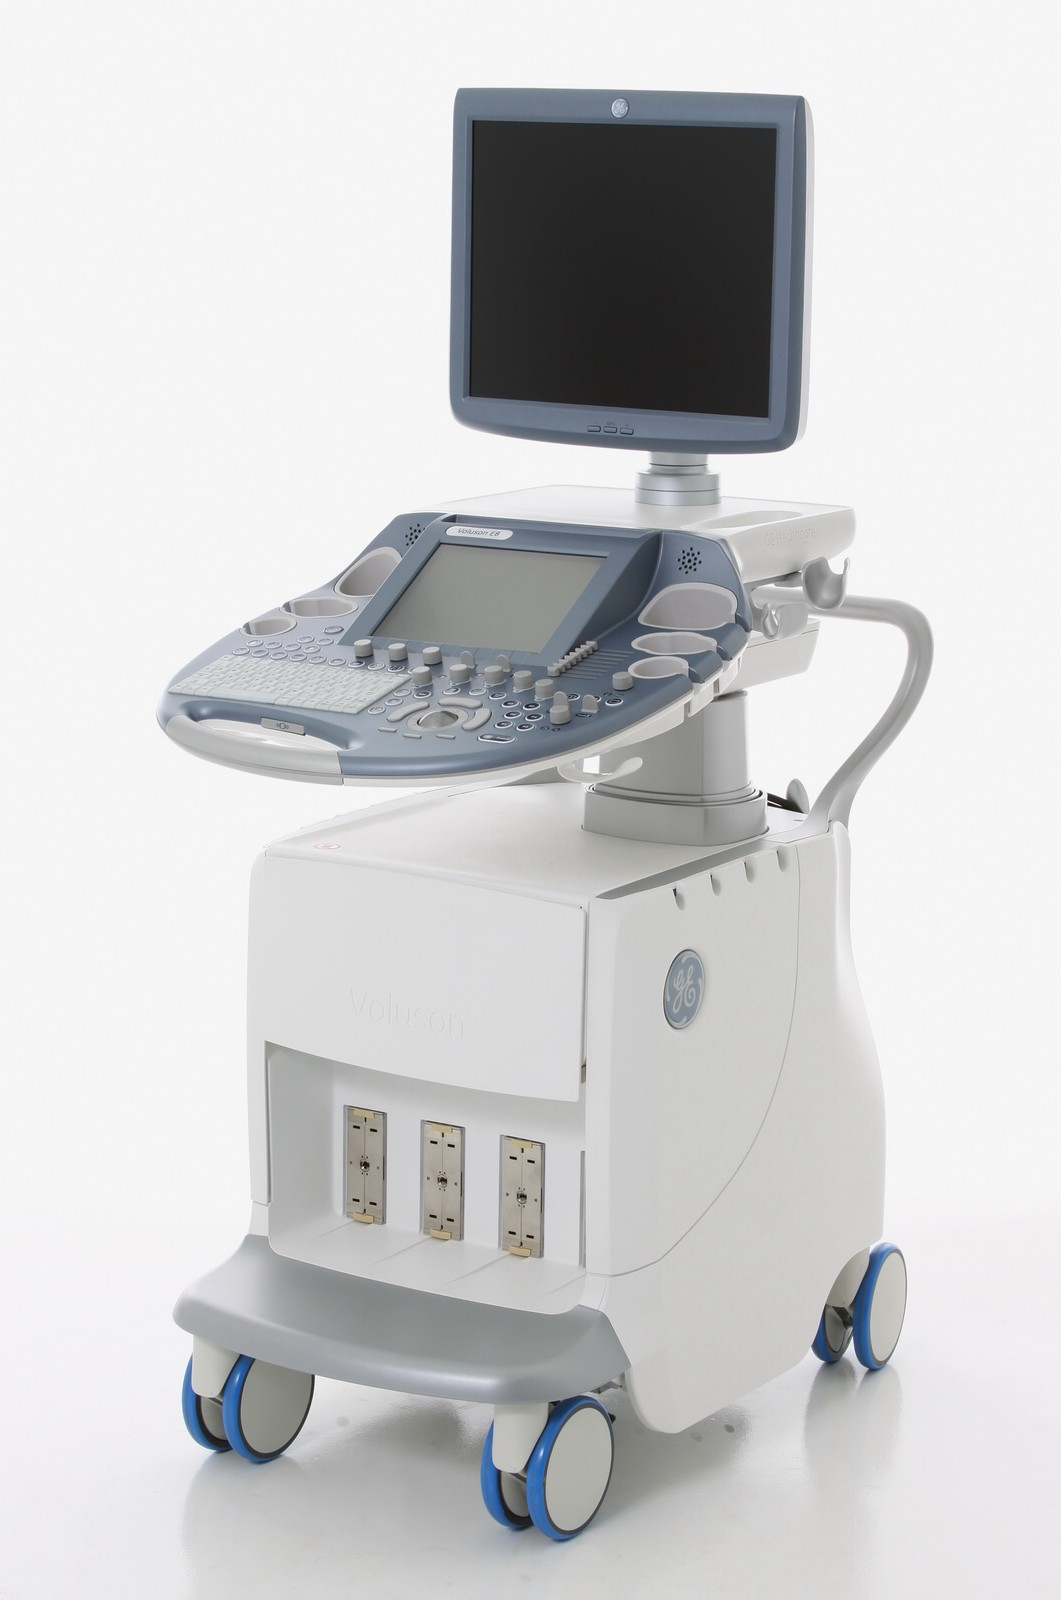 ge-healthcare-intermediate-ultrasound-systems-for-women-s-health-sono